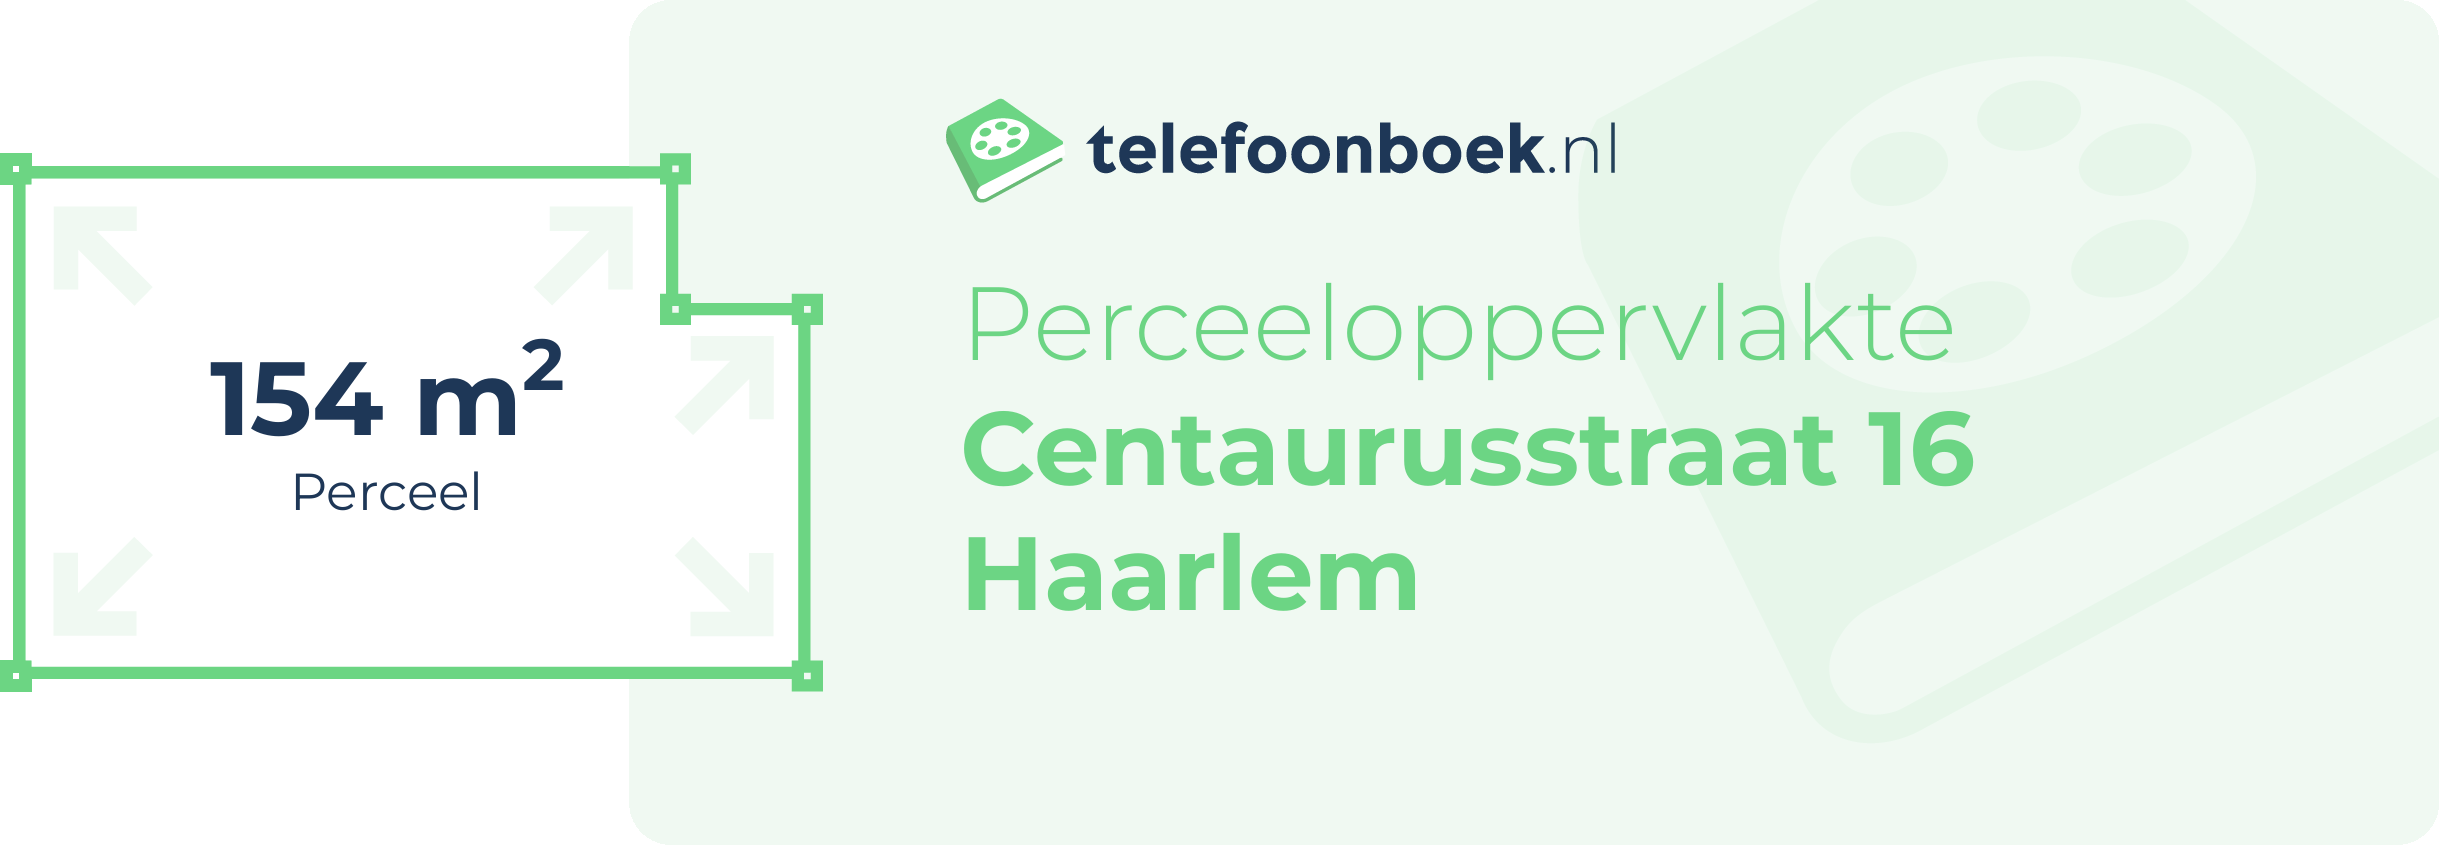 Perceeloppervlakte Centaurusstraat 16 Haarlem